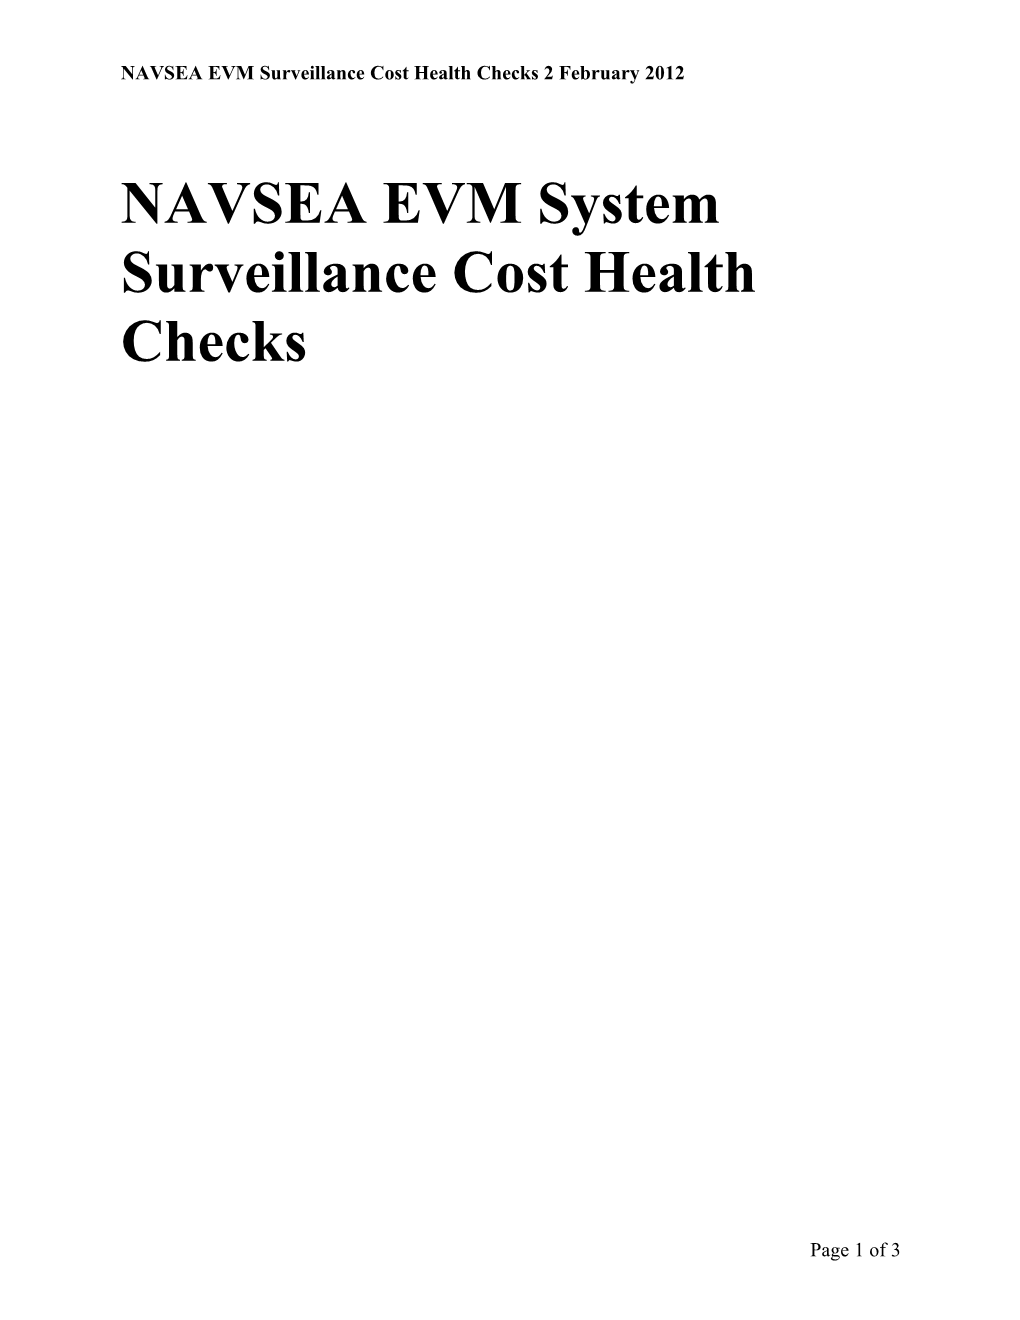 CEVM Cost Health Check